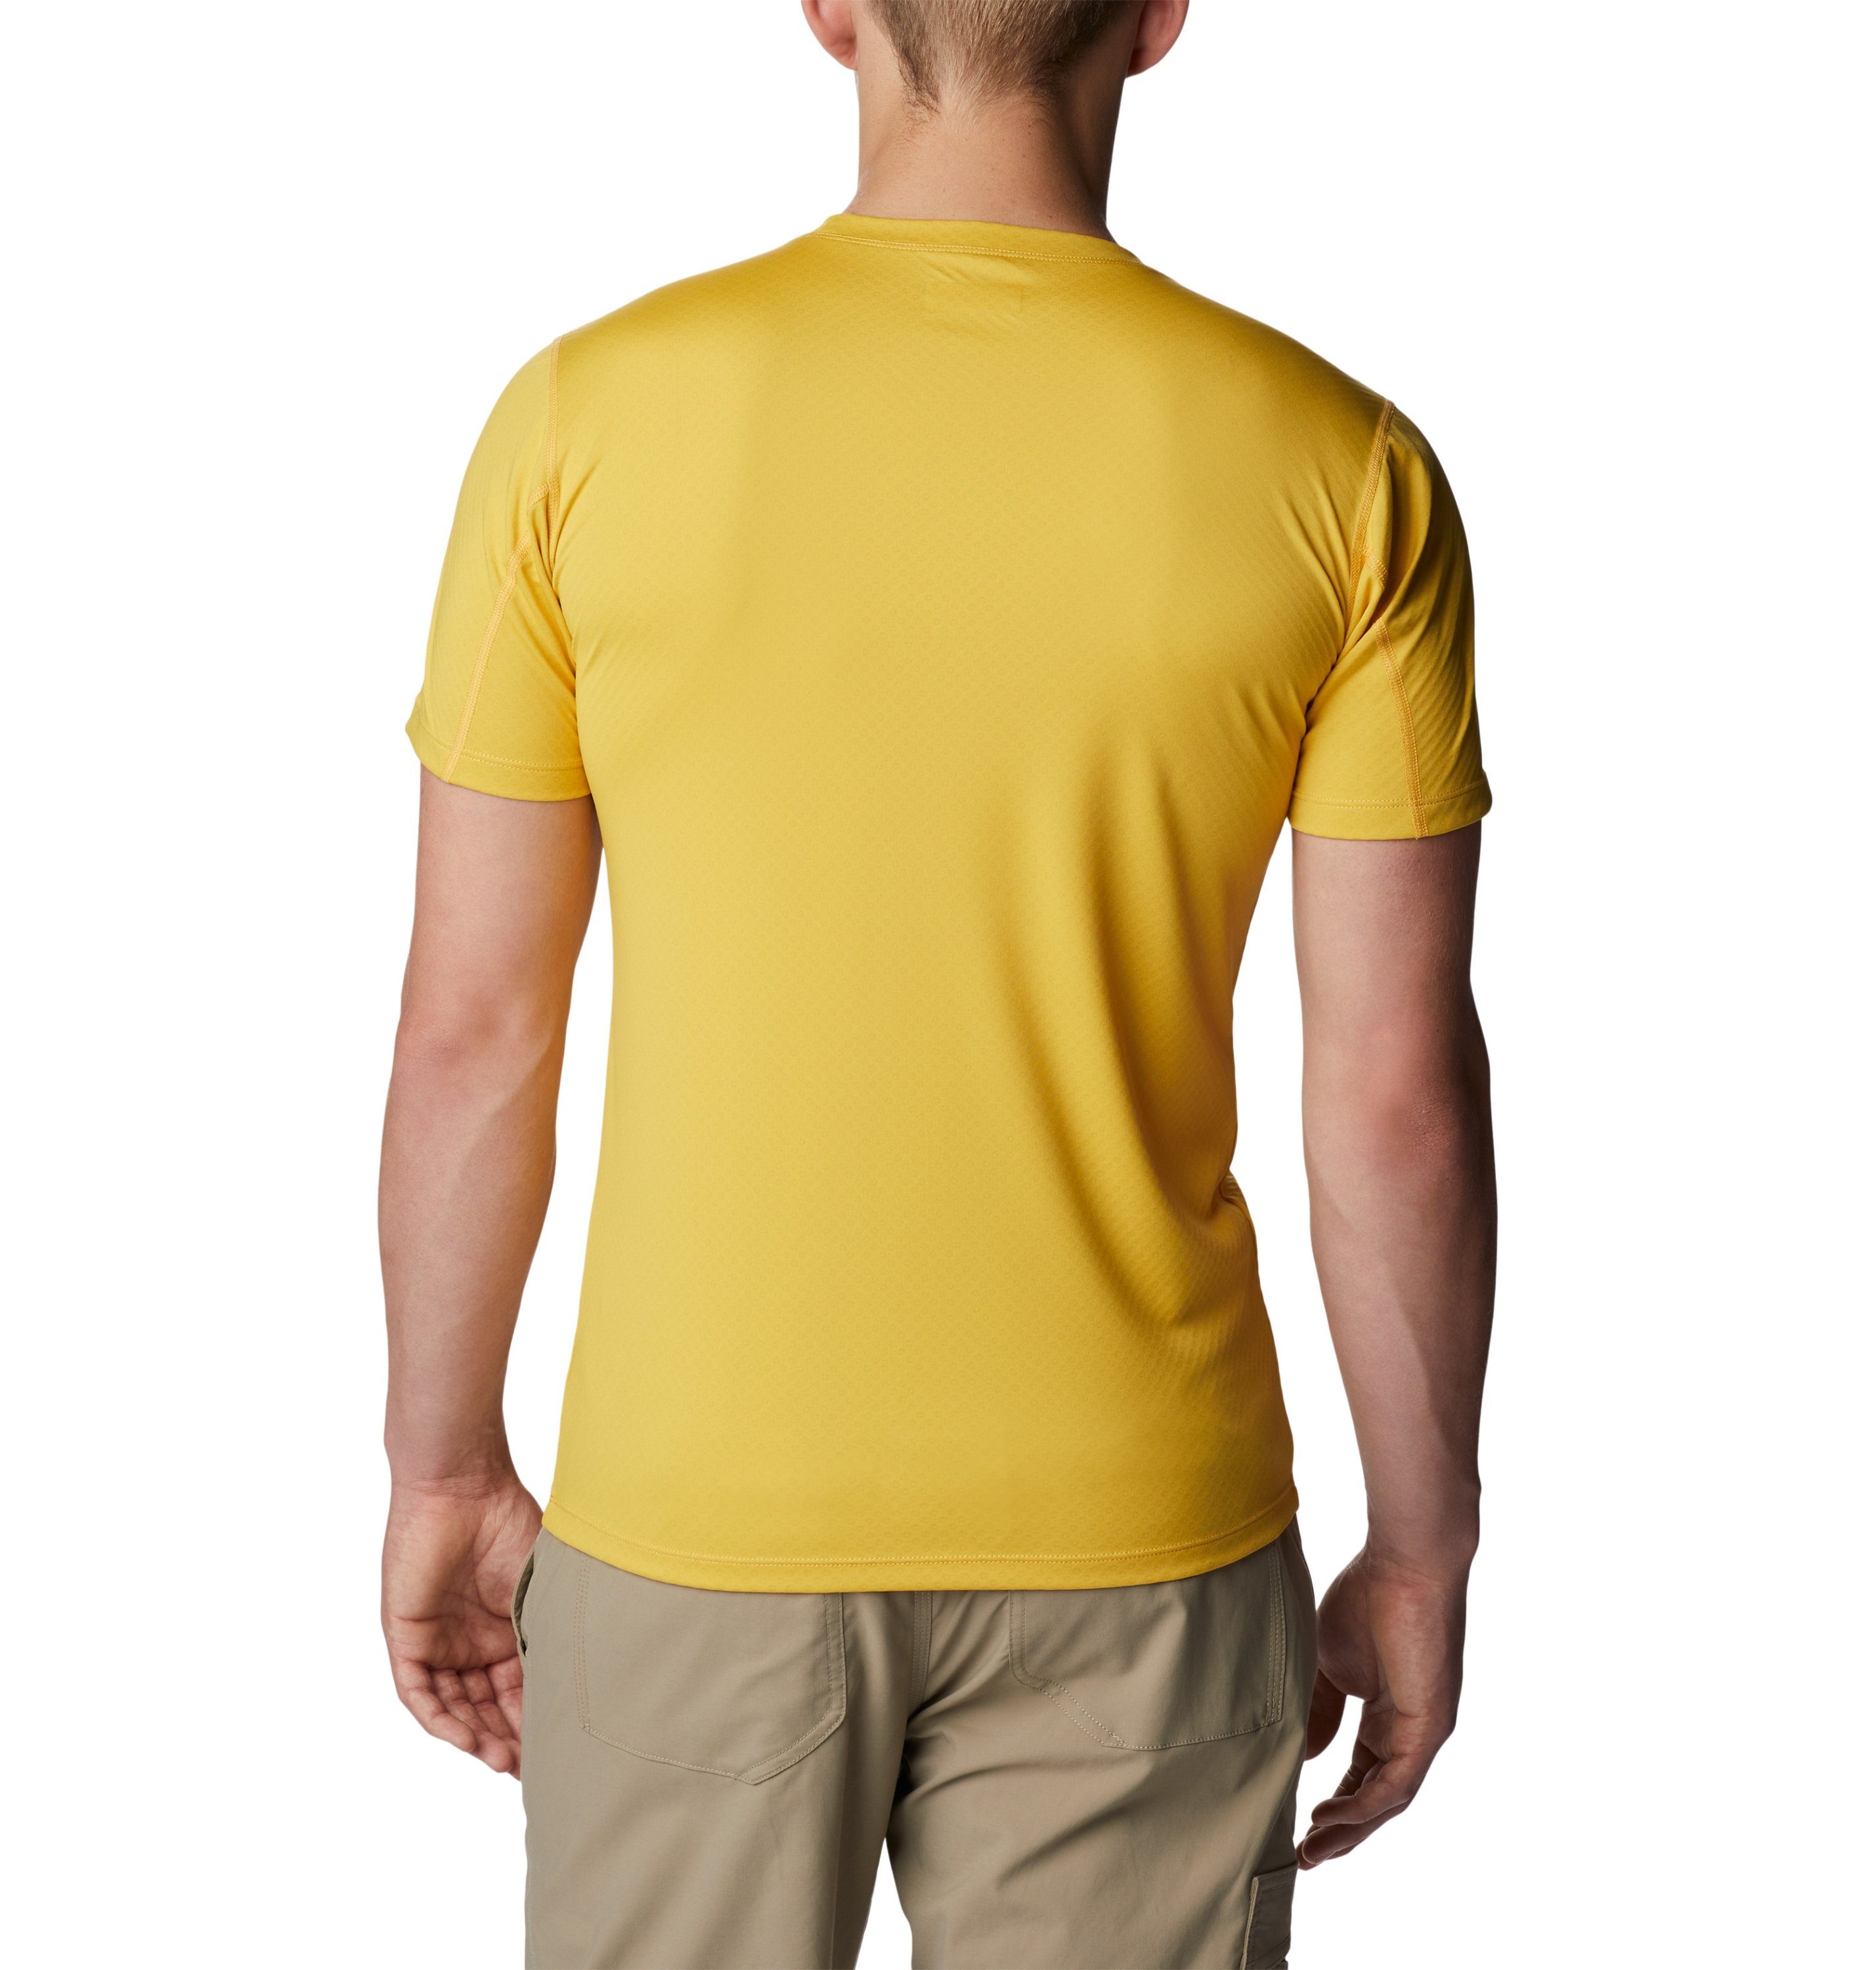 Nugget, Shirt Columbia T-Shirt Herren Rules Sleeve Short Golden Columbia Fossil Zero Ancient